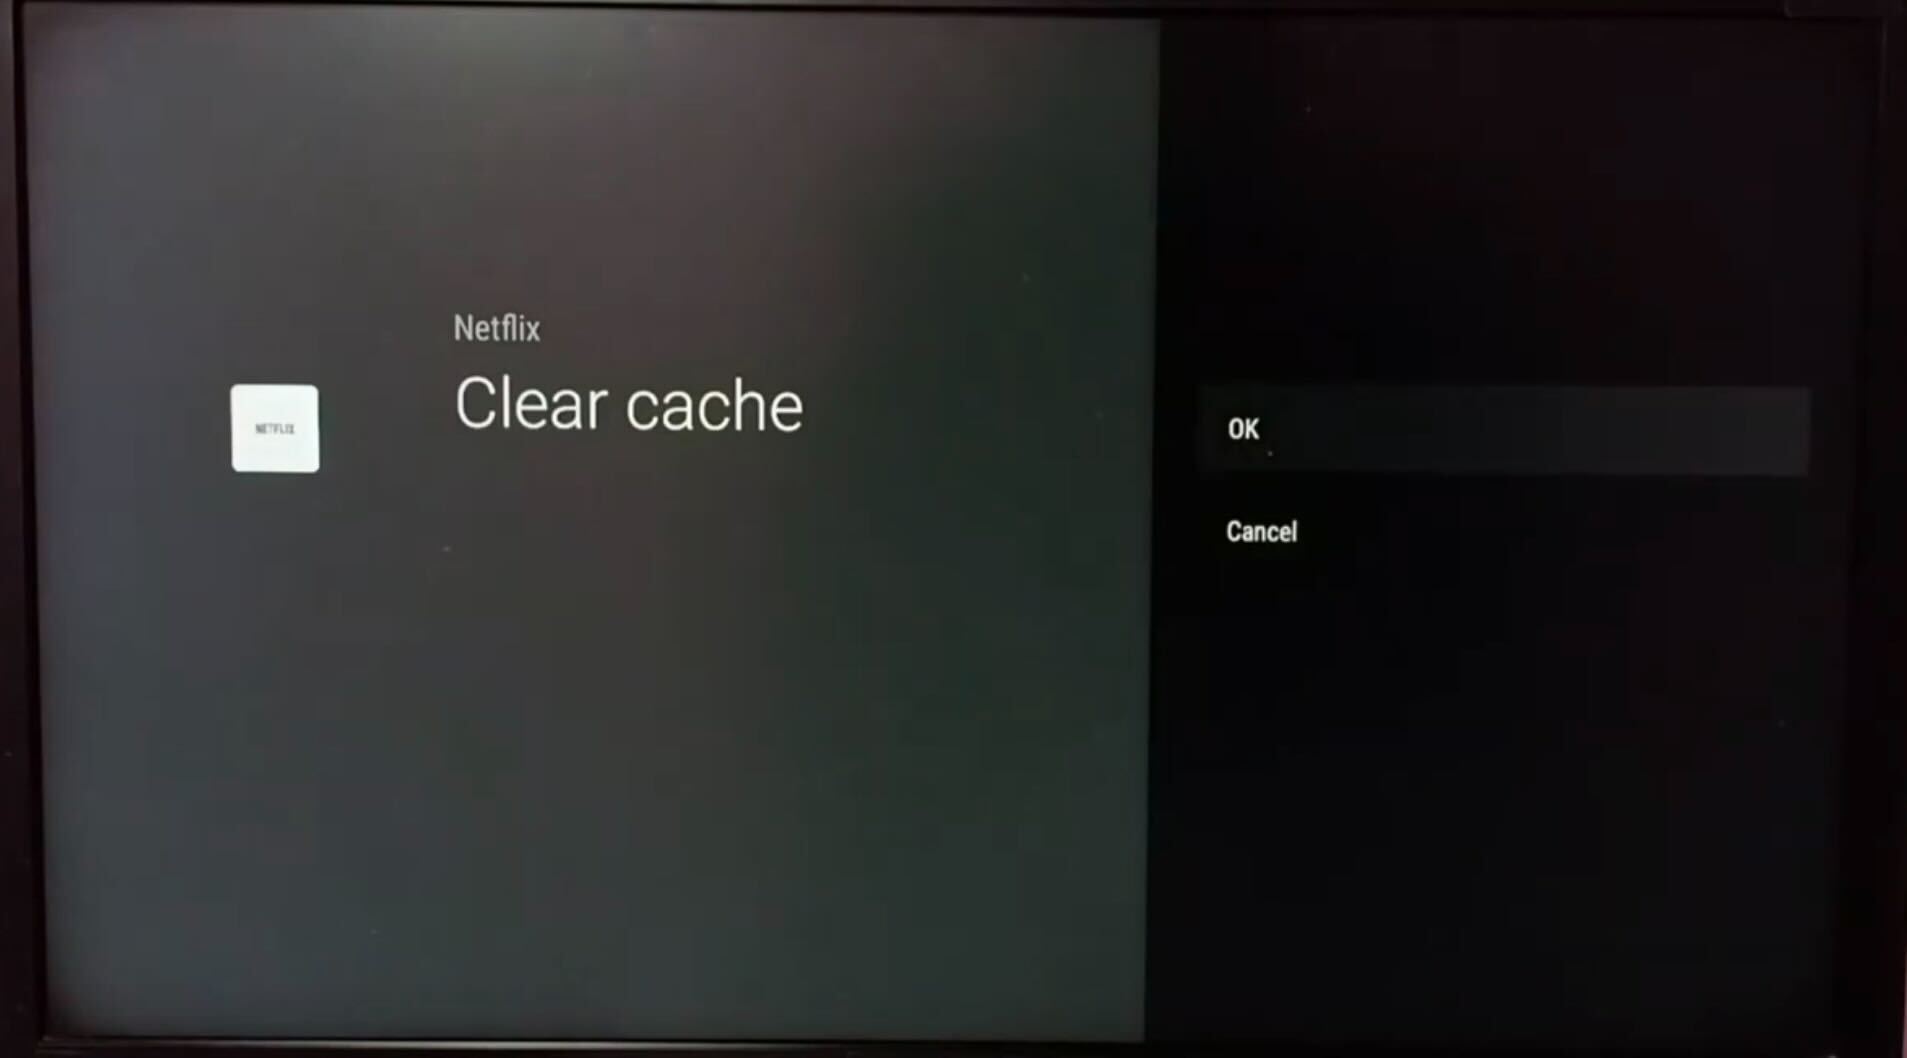 Google TV Clear cache of an app